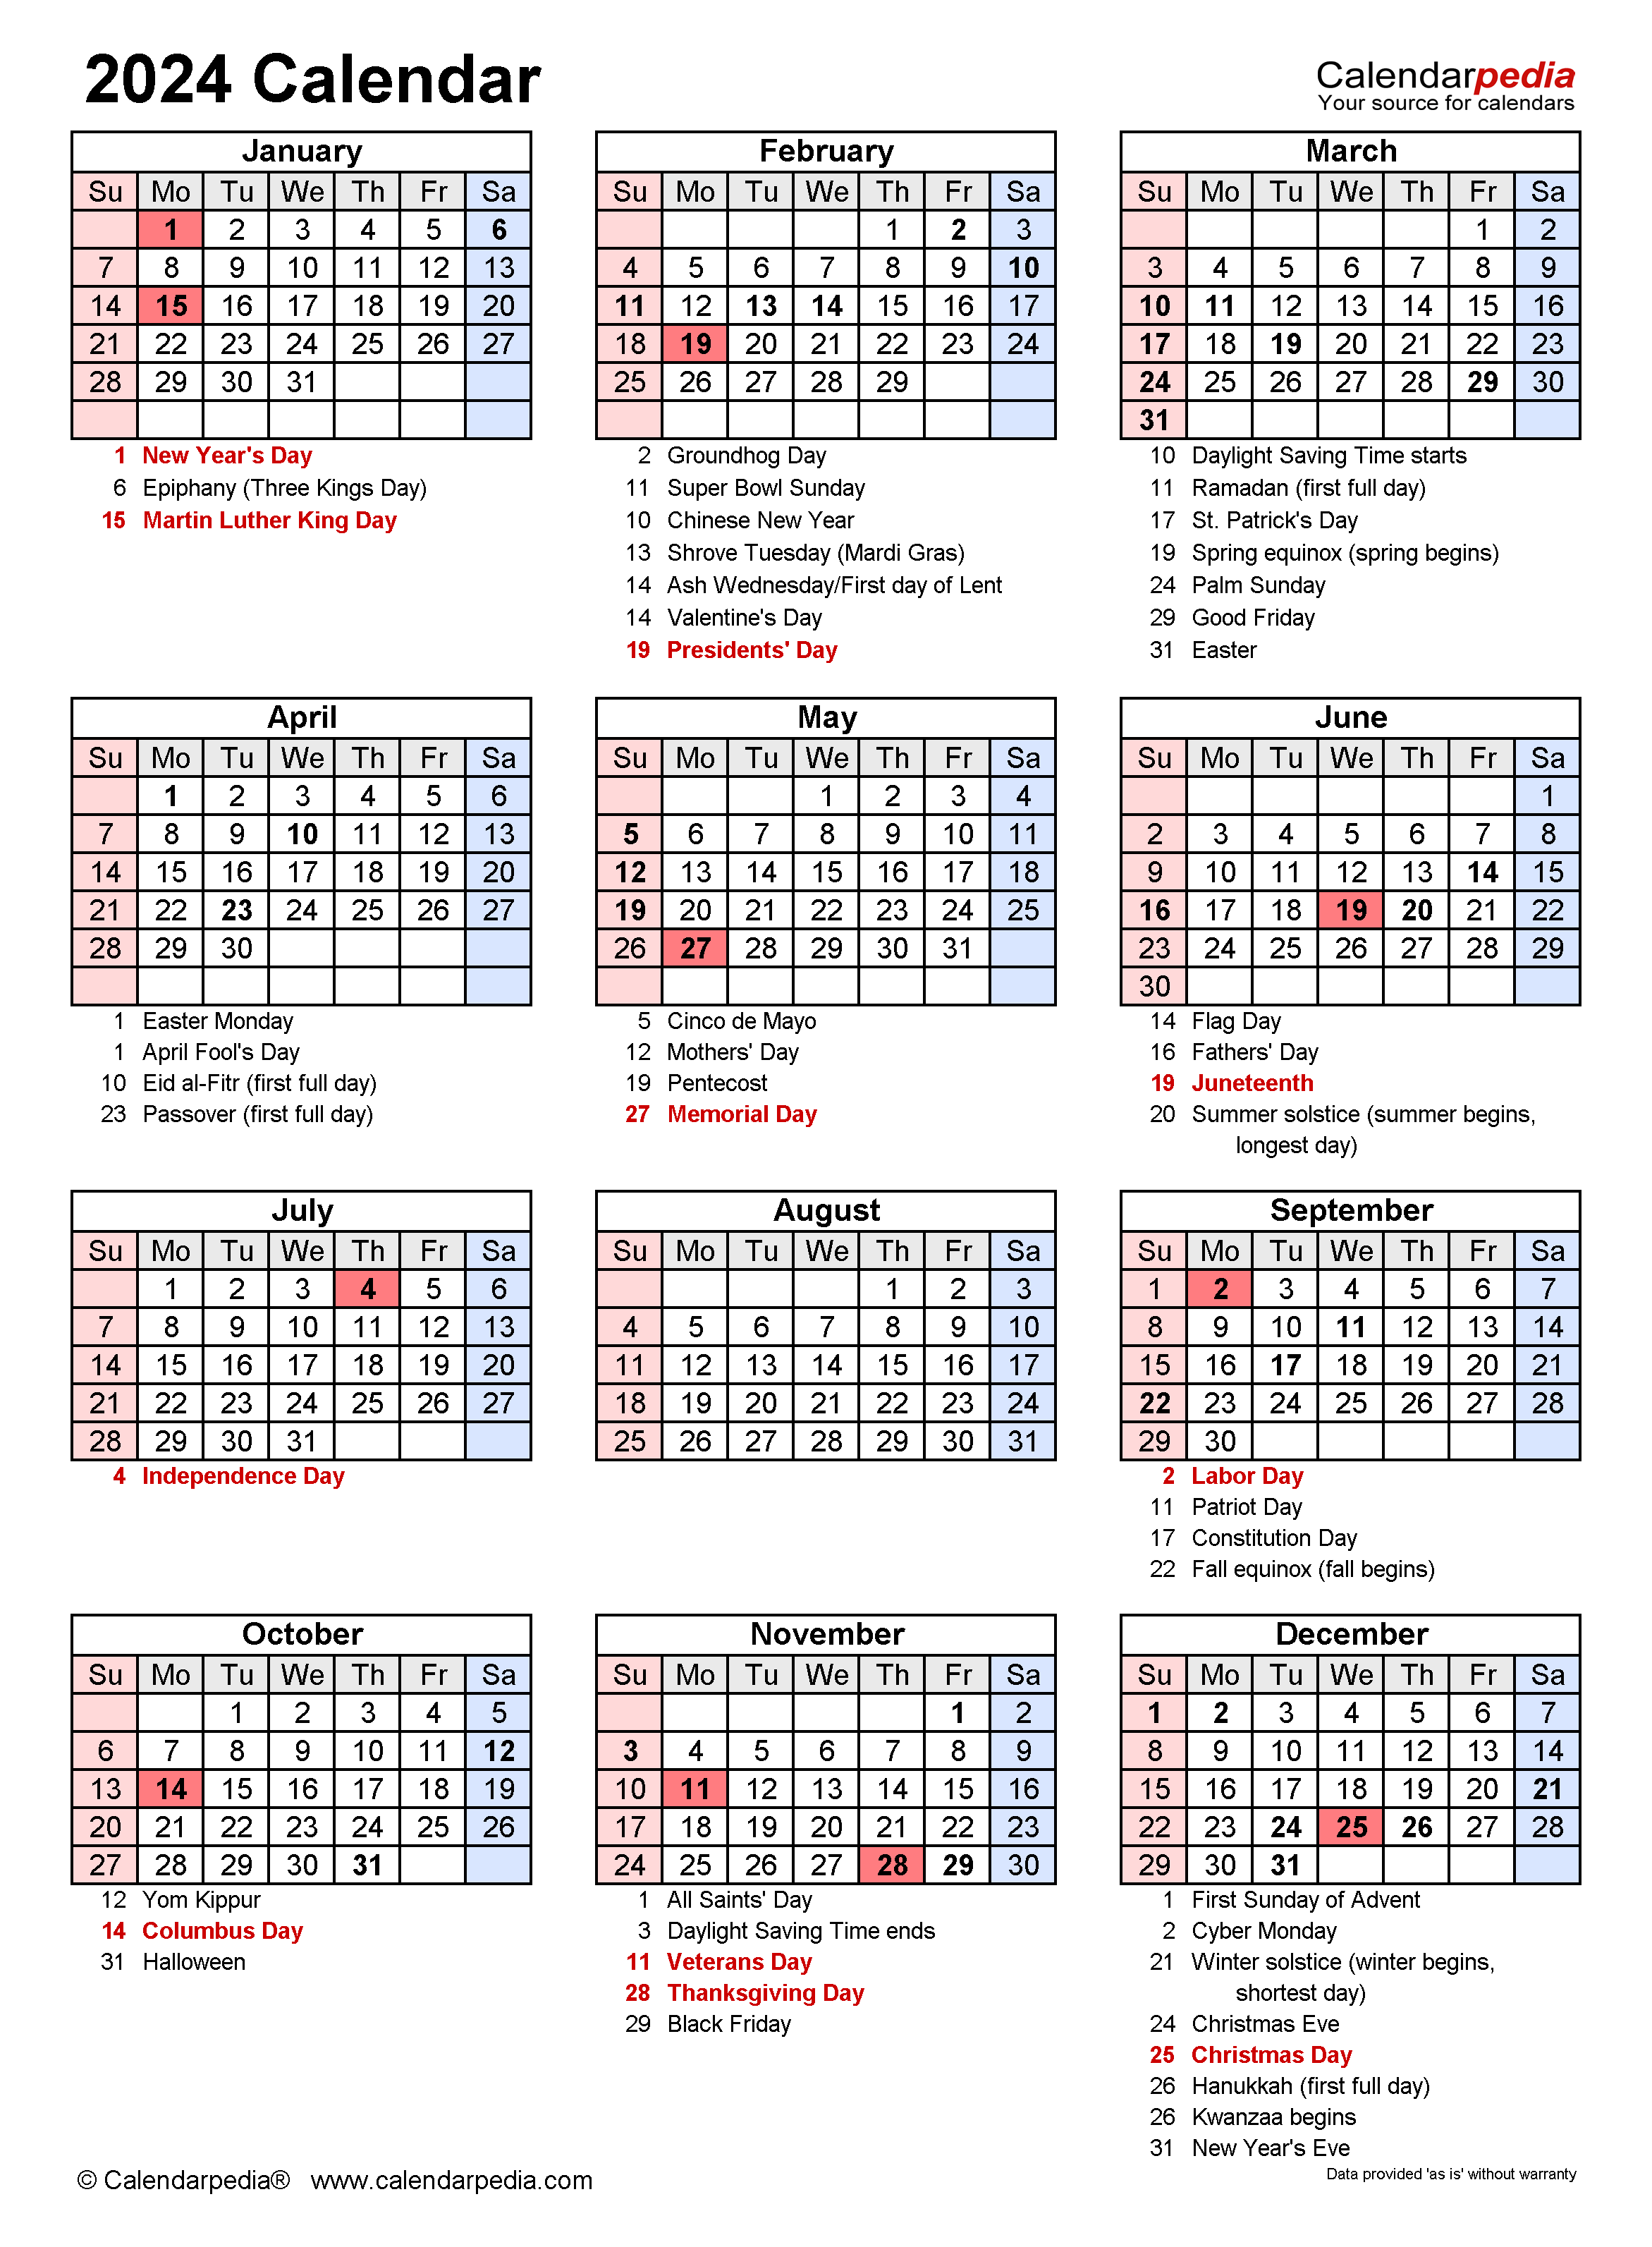 2024 Calendar Free Printable PDF Templates Calendarpedia - Free Printable 2024 Calendar With Us Holidays